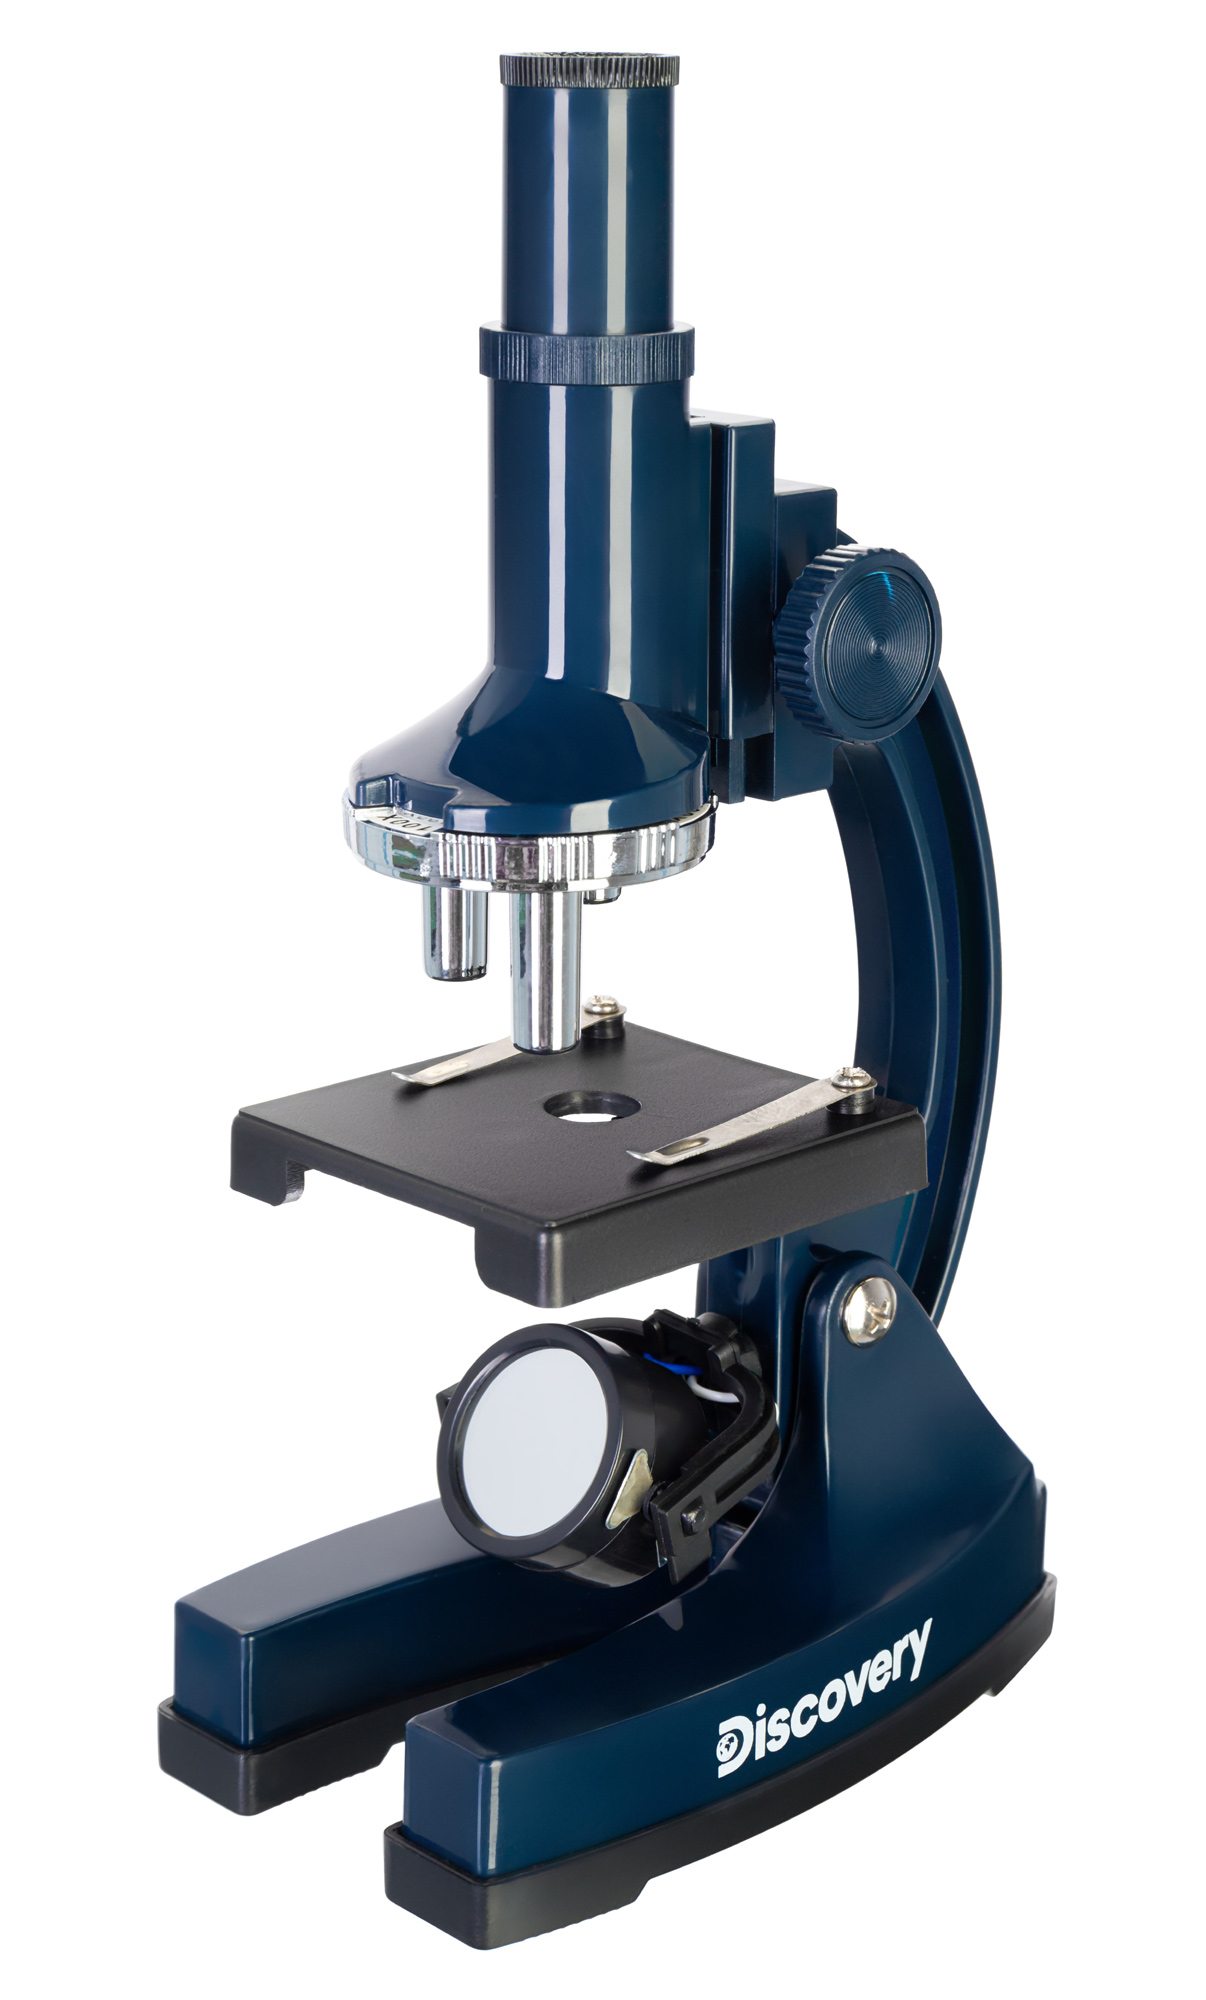 Микроскоп Levenhuk Discovery Centi 02 с книгой 78241 микроскоп discovery micro terra с книгой nd77956